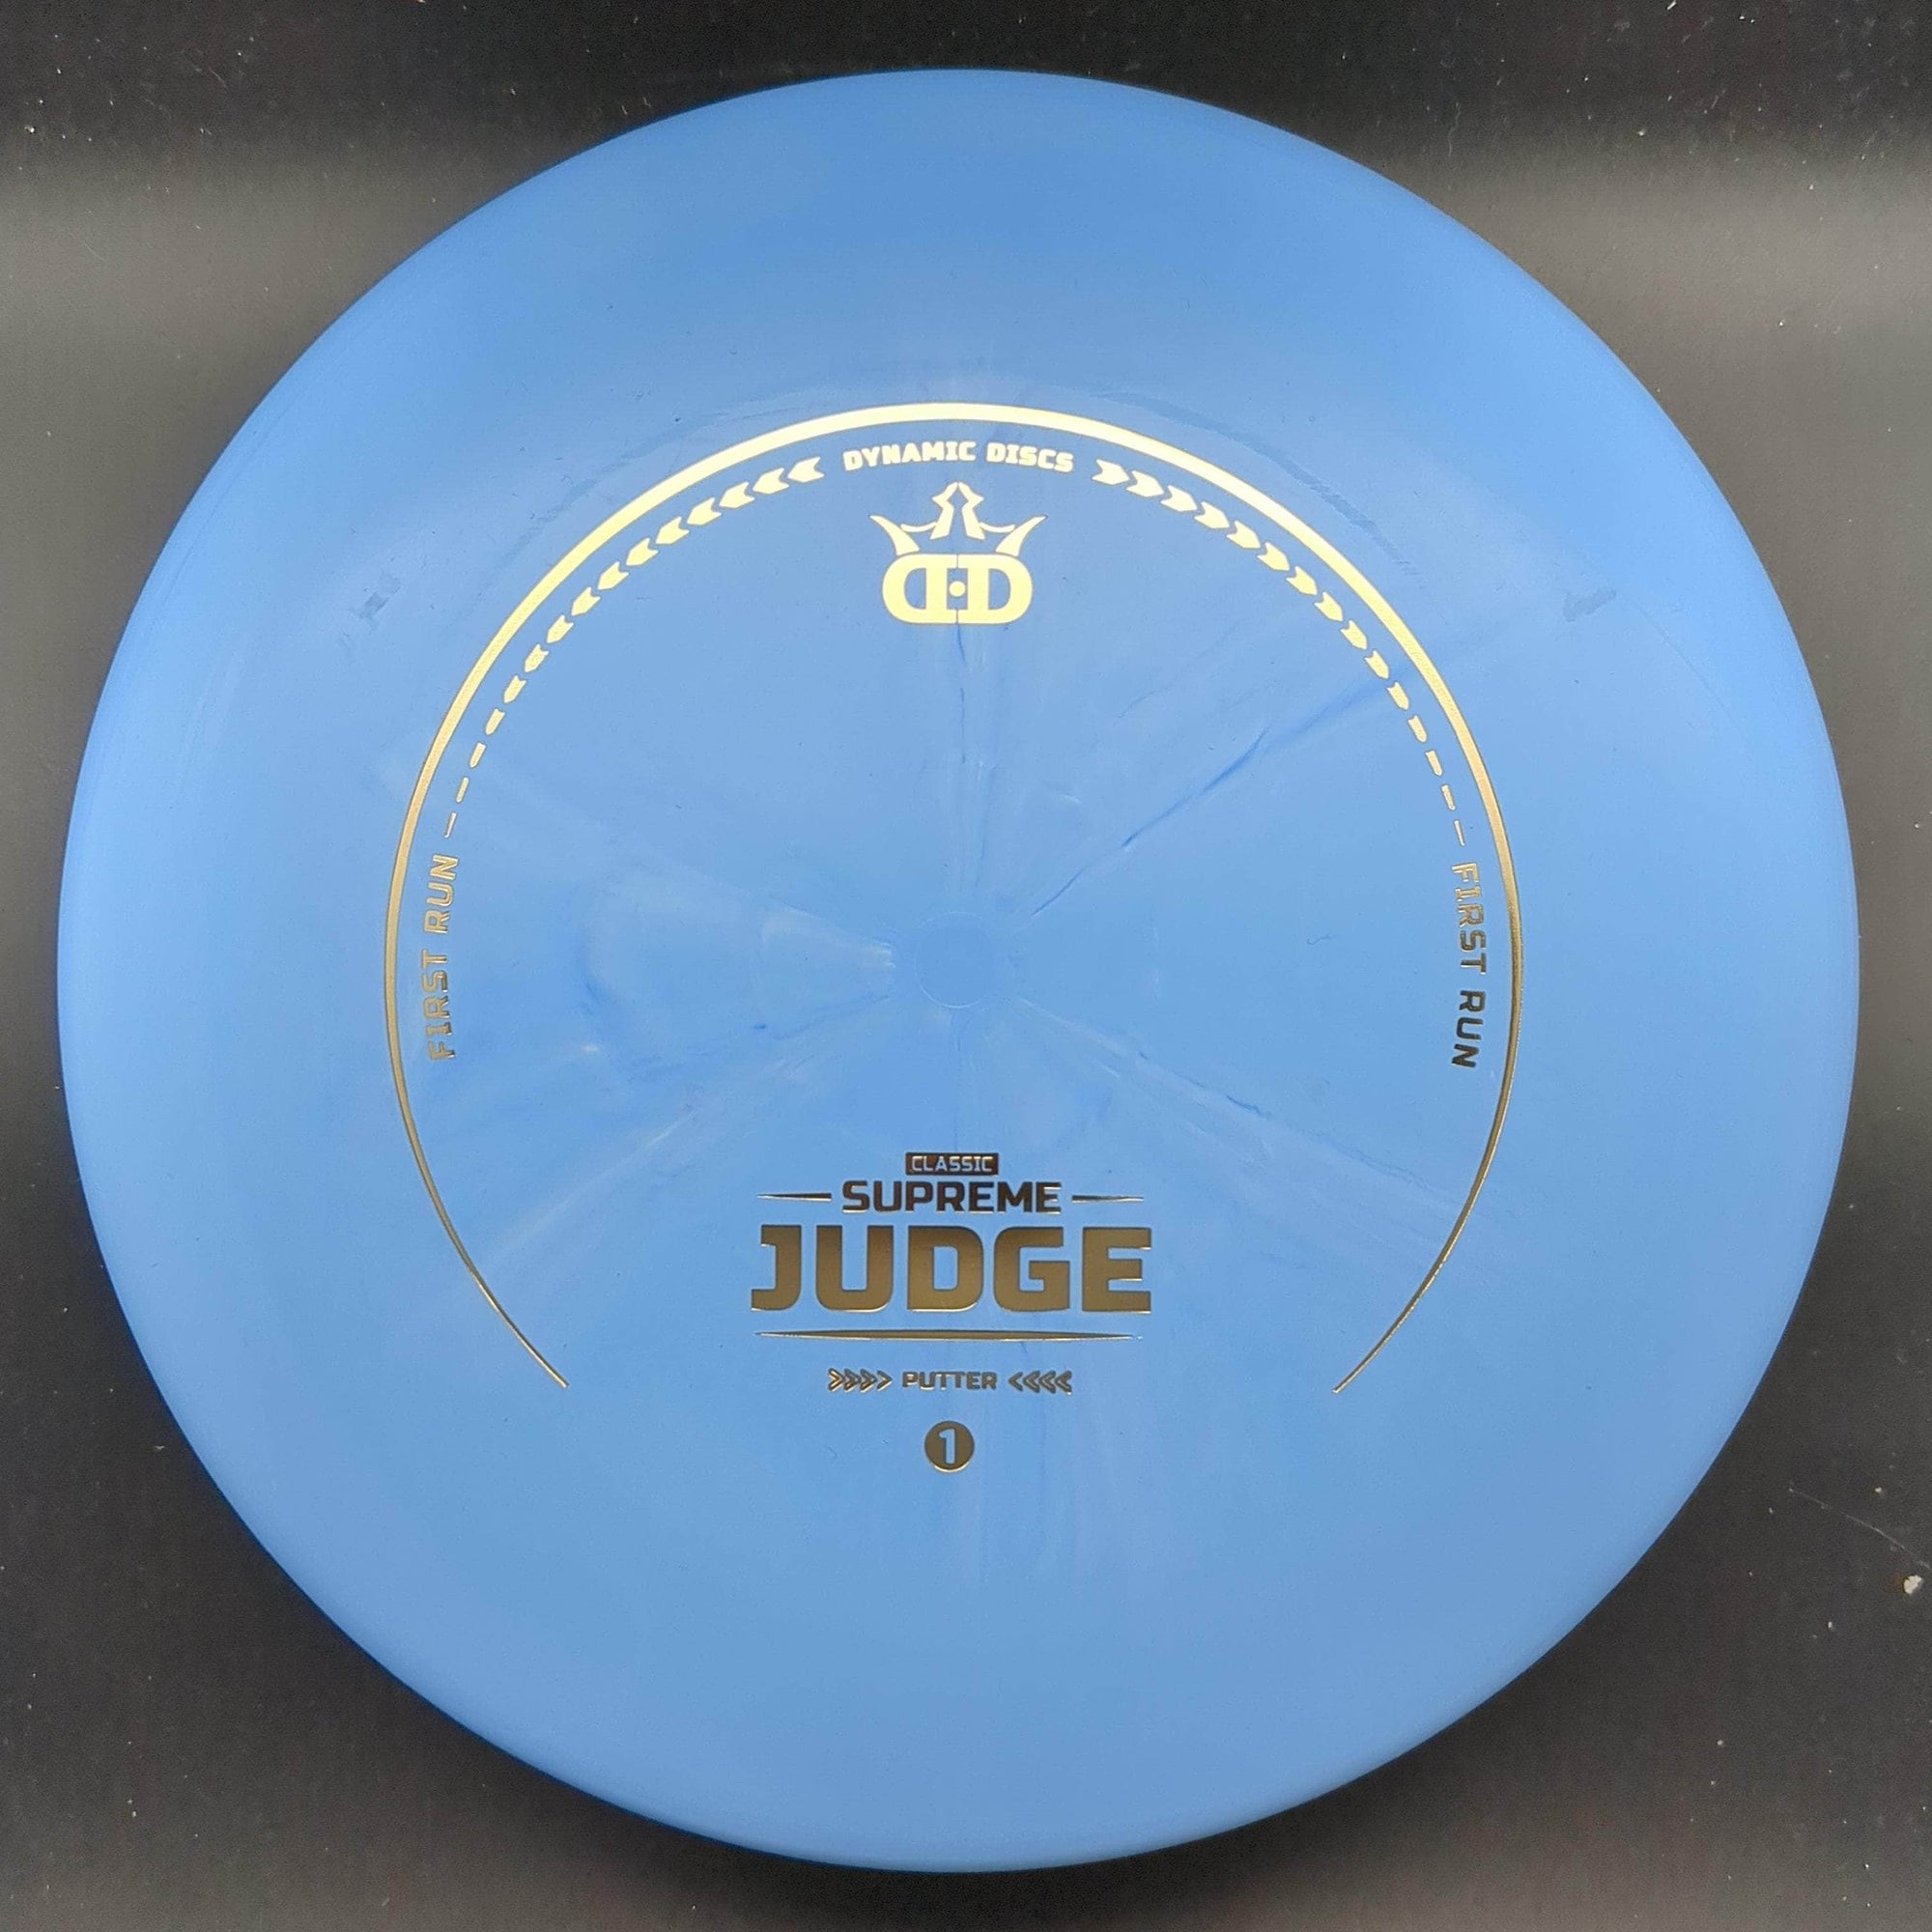 Dynamic Discs Putter Light Blue 173g Judge, Supreme, First Run